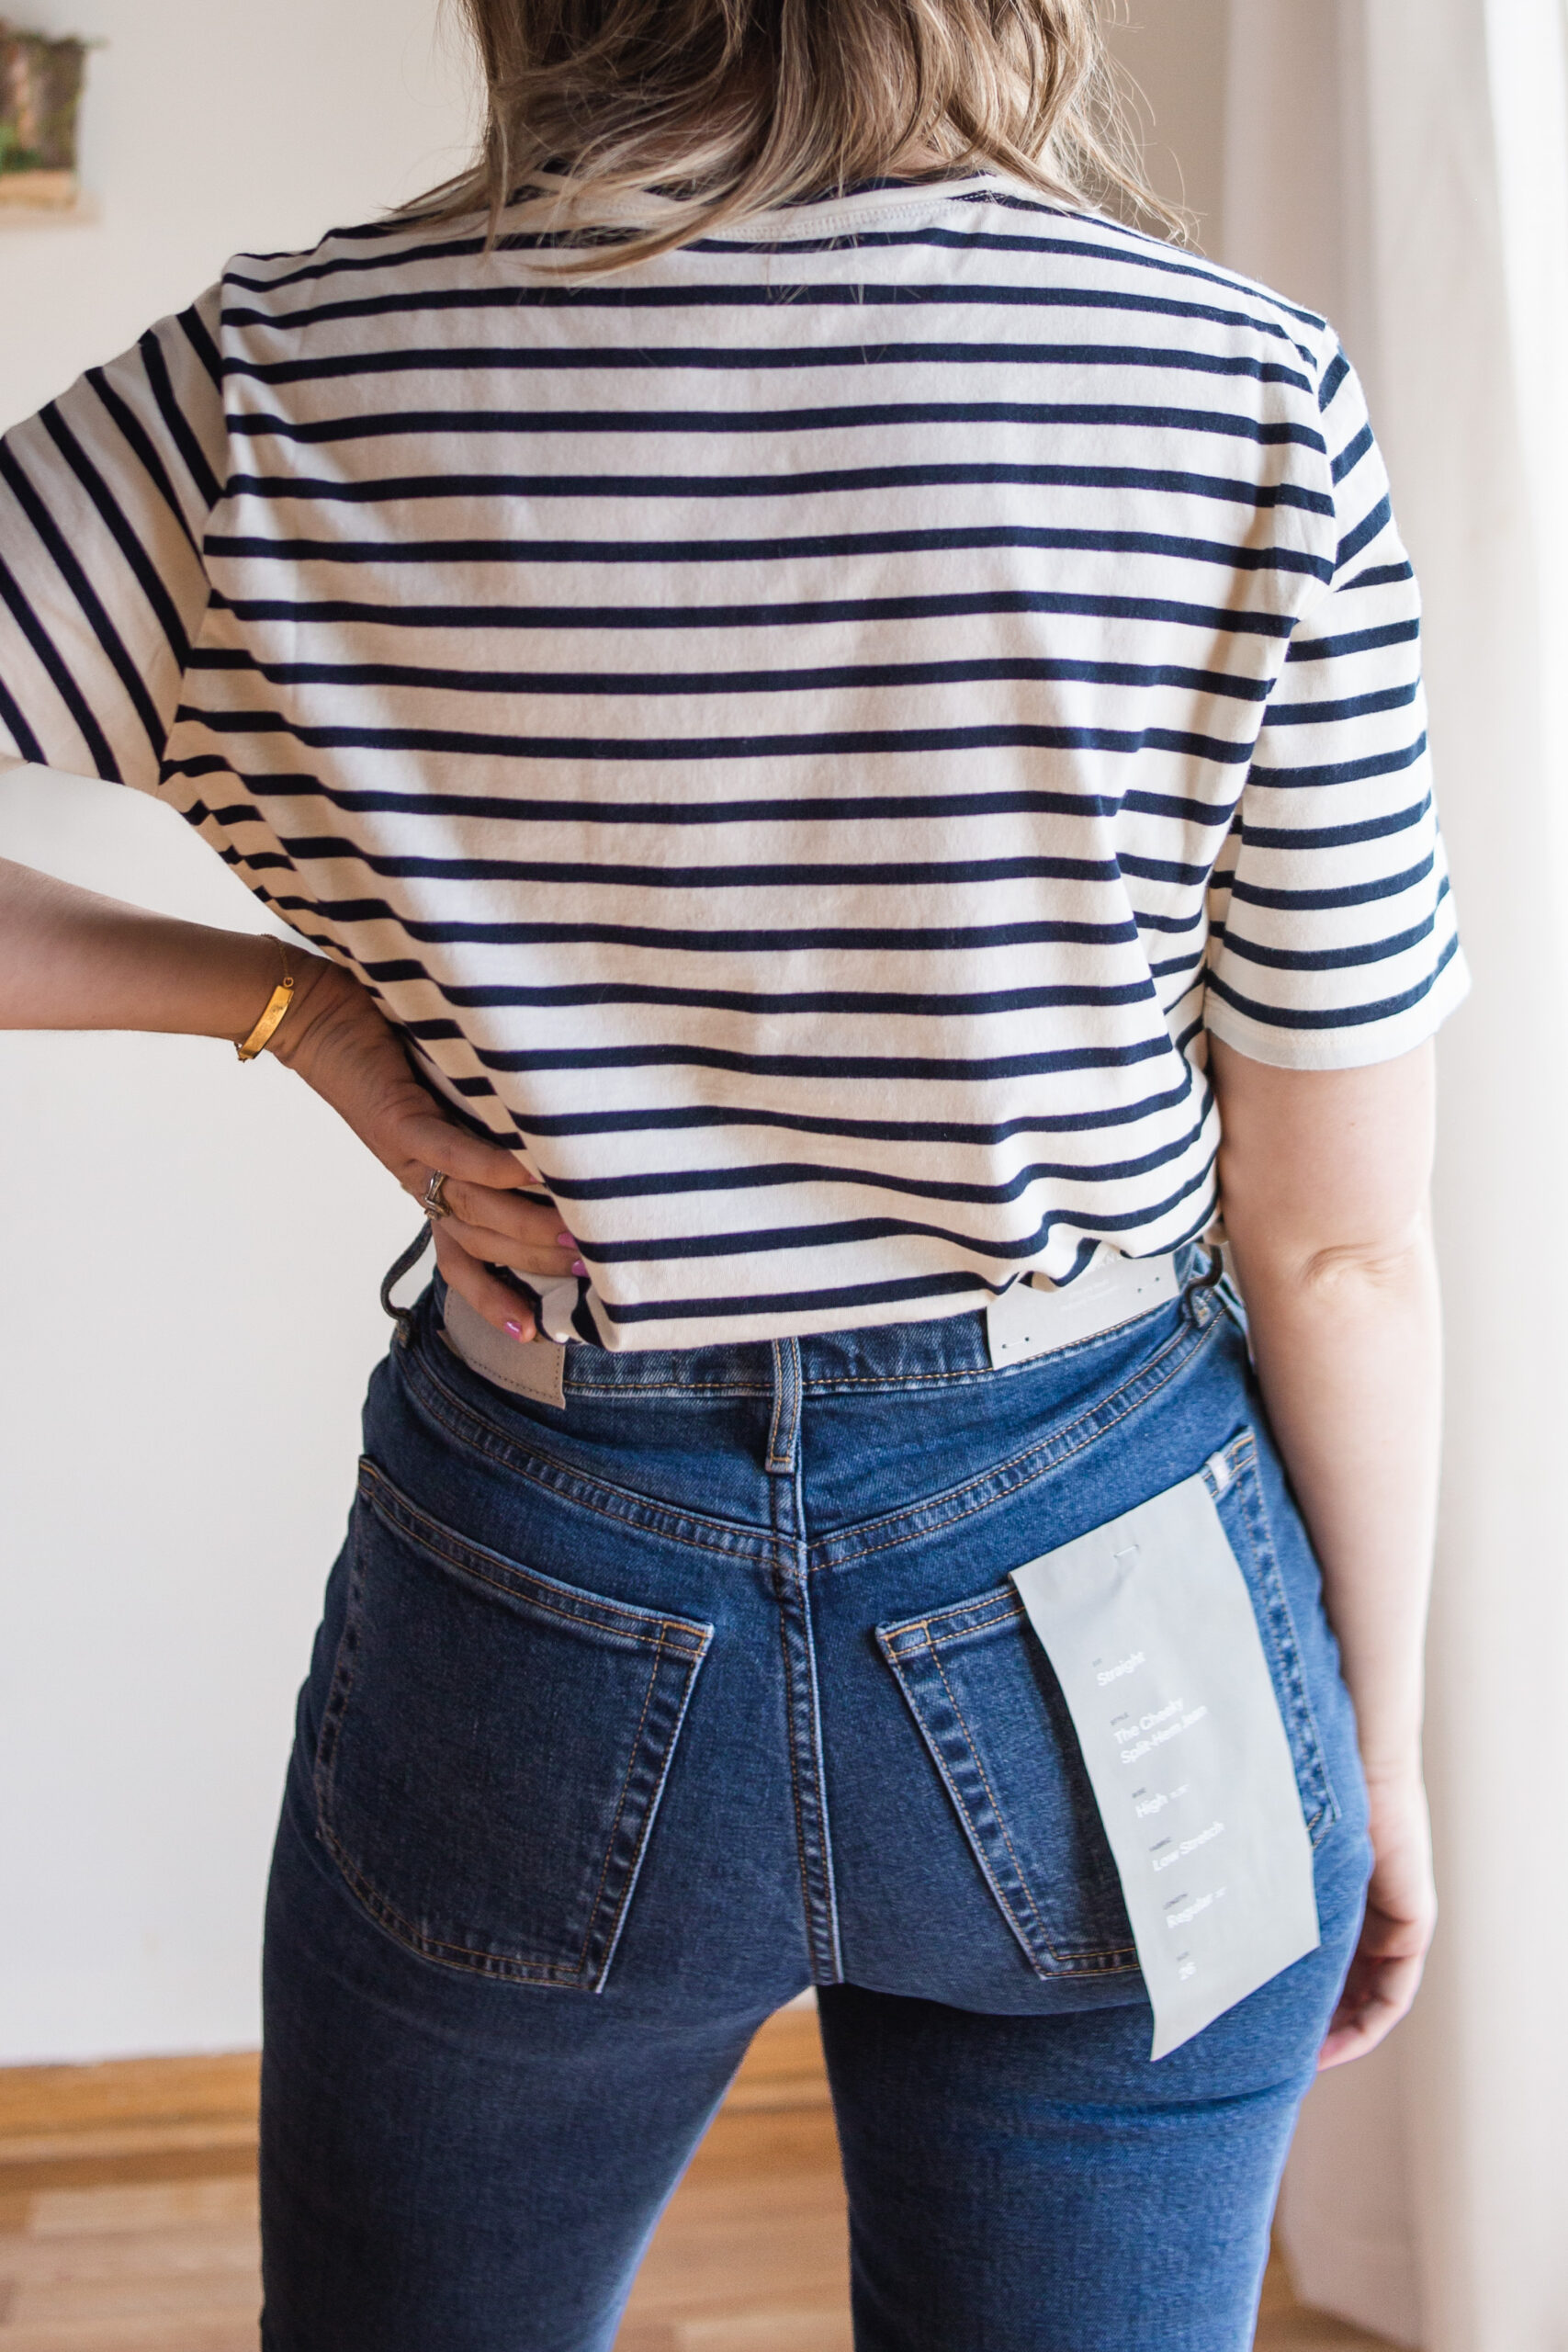 Karin Emily wears a black and white striped tee and everlane cheeky split hem jeans